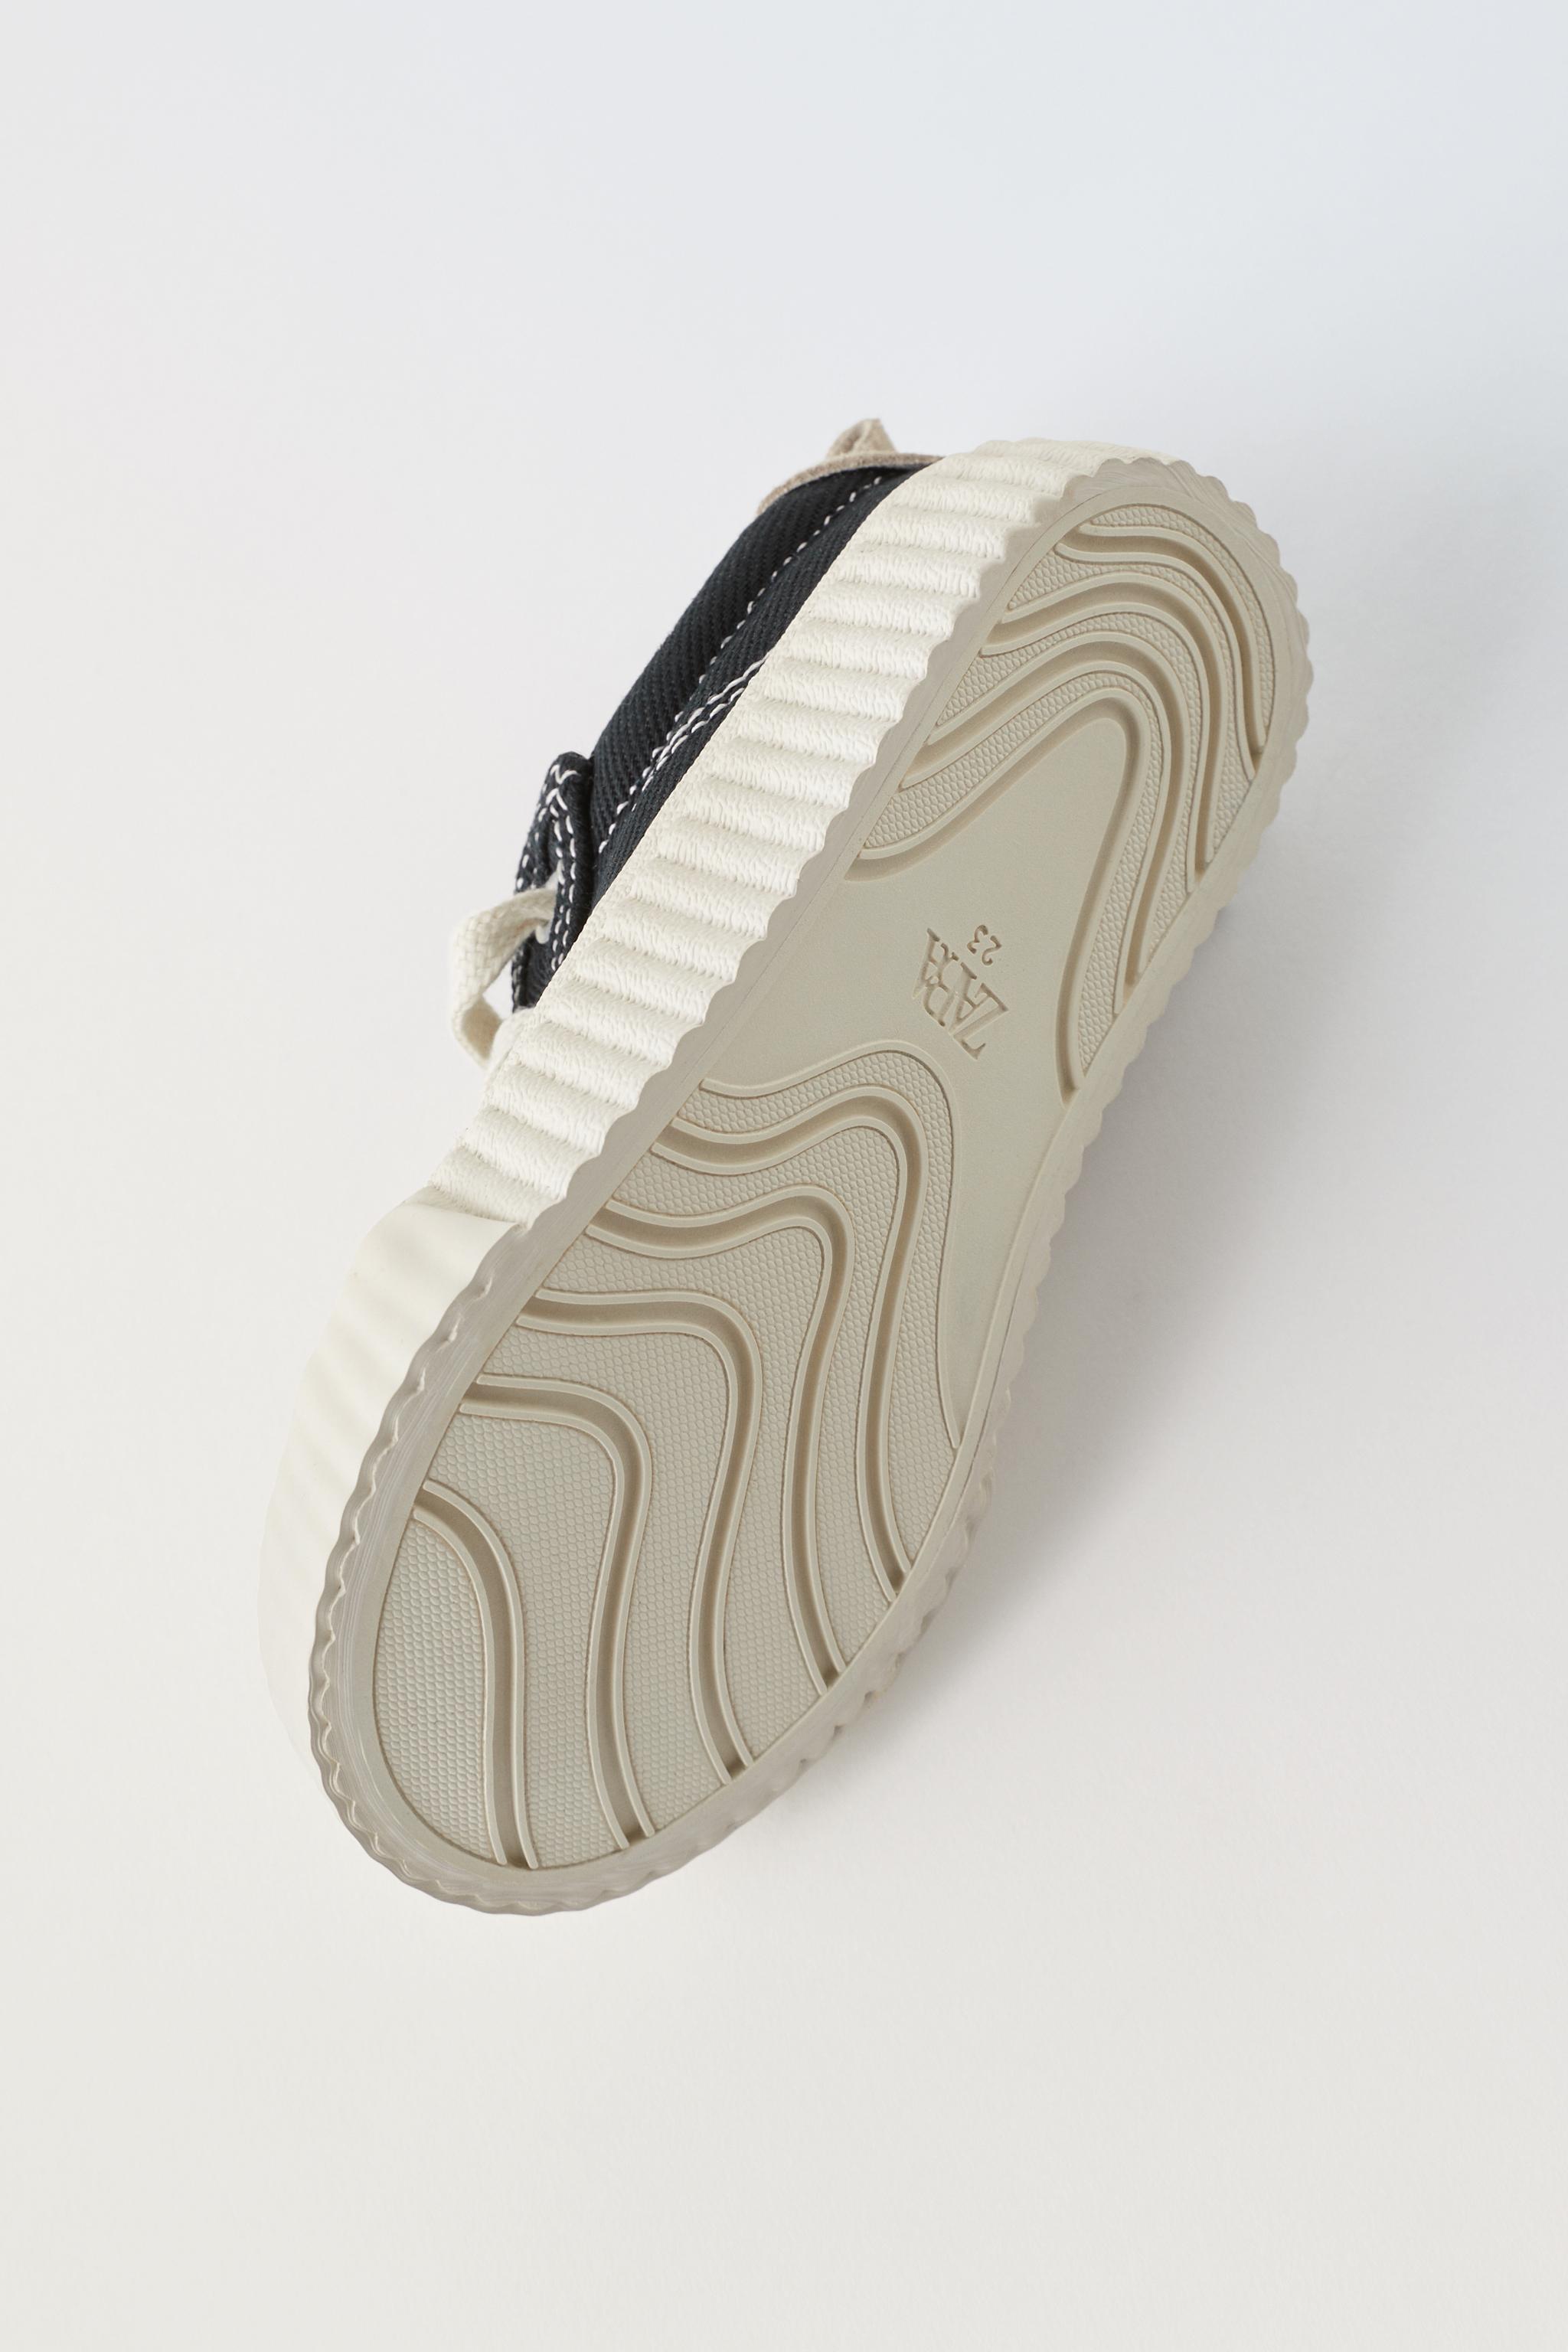 KIK, Shoes, Kik 44eur11 Denim Suede Sneakers